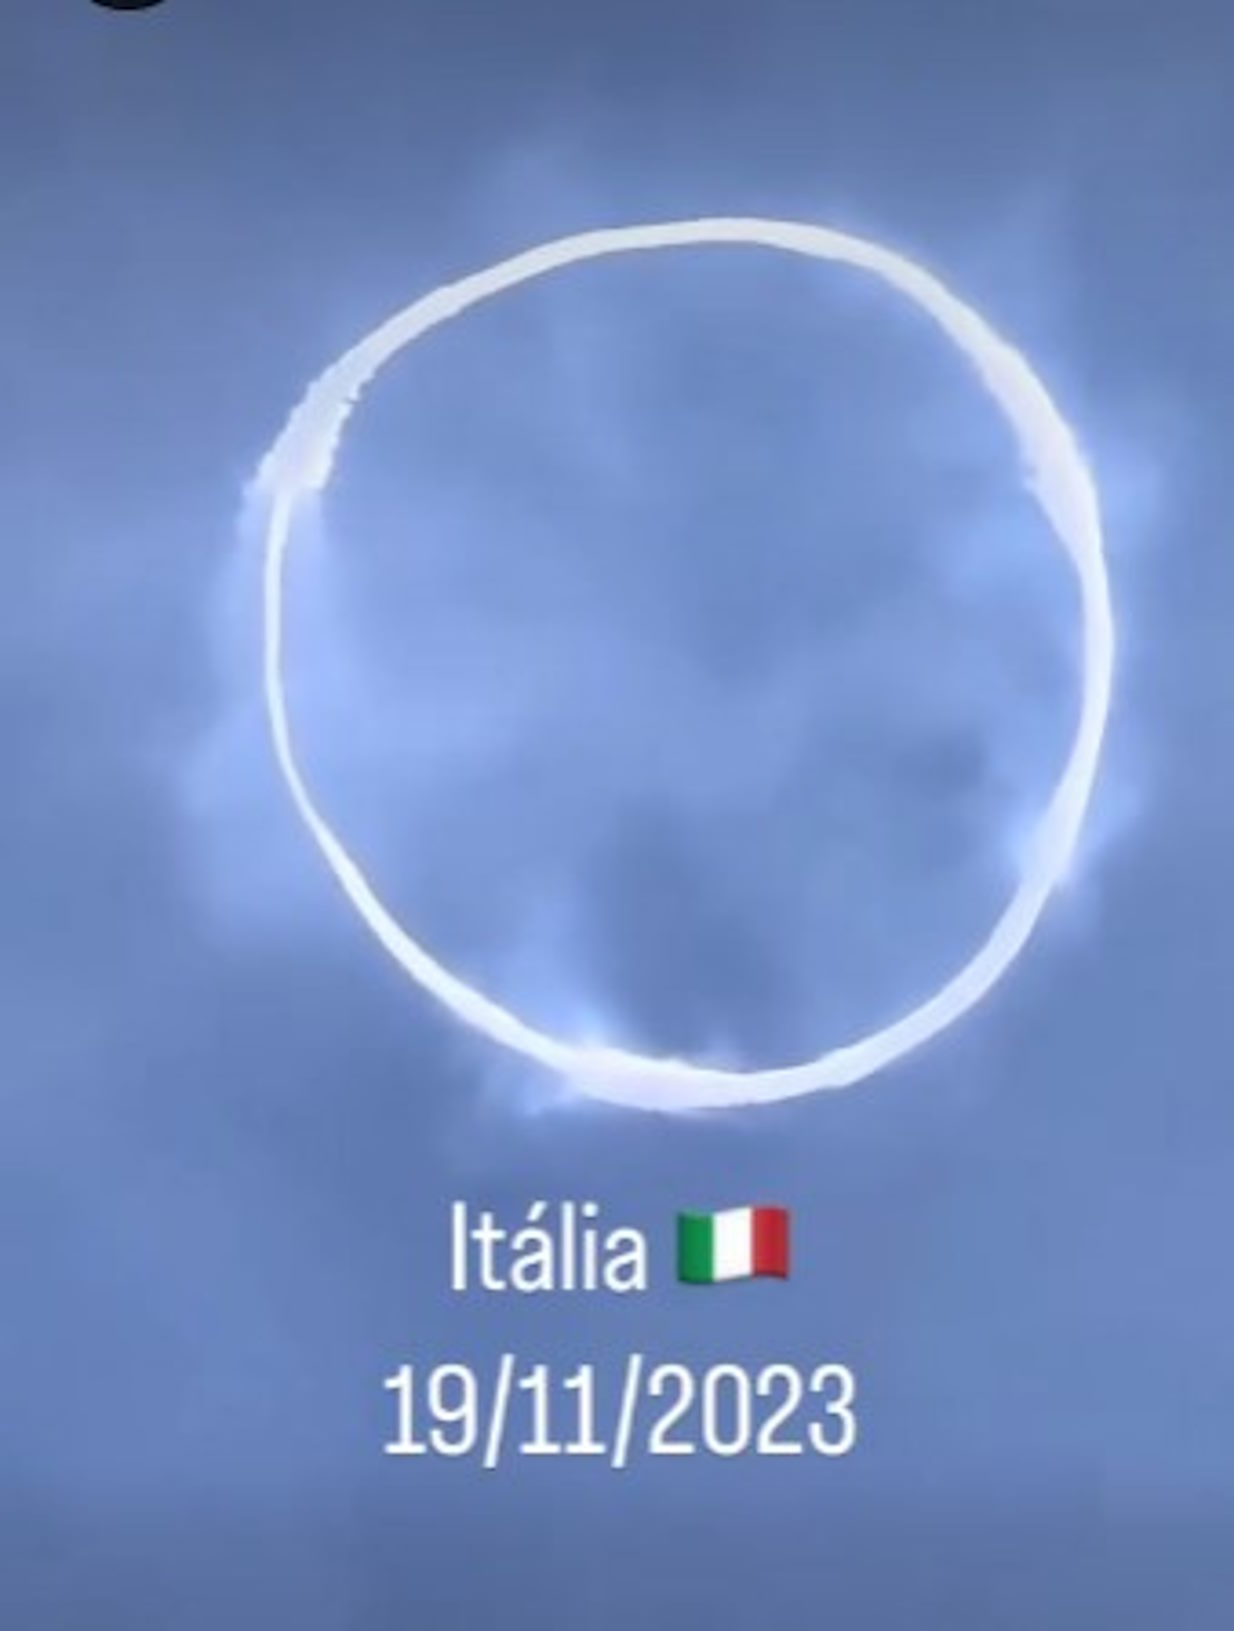 Arco de luz visto por los testigos en Italia